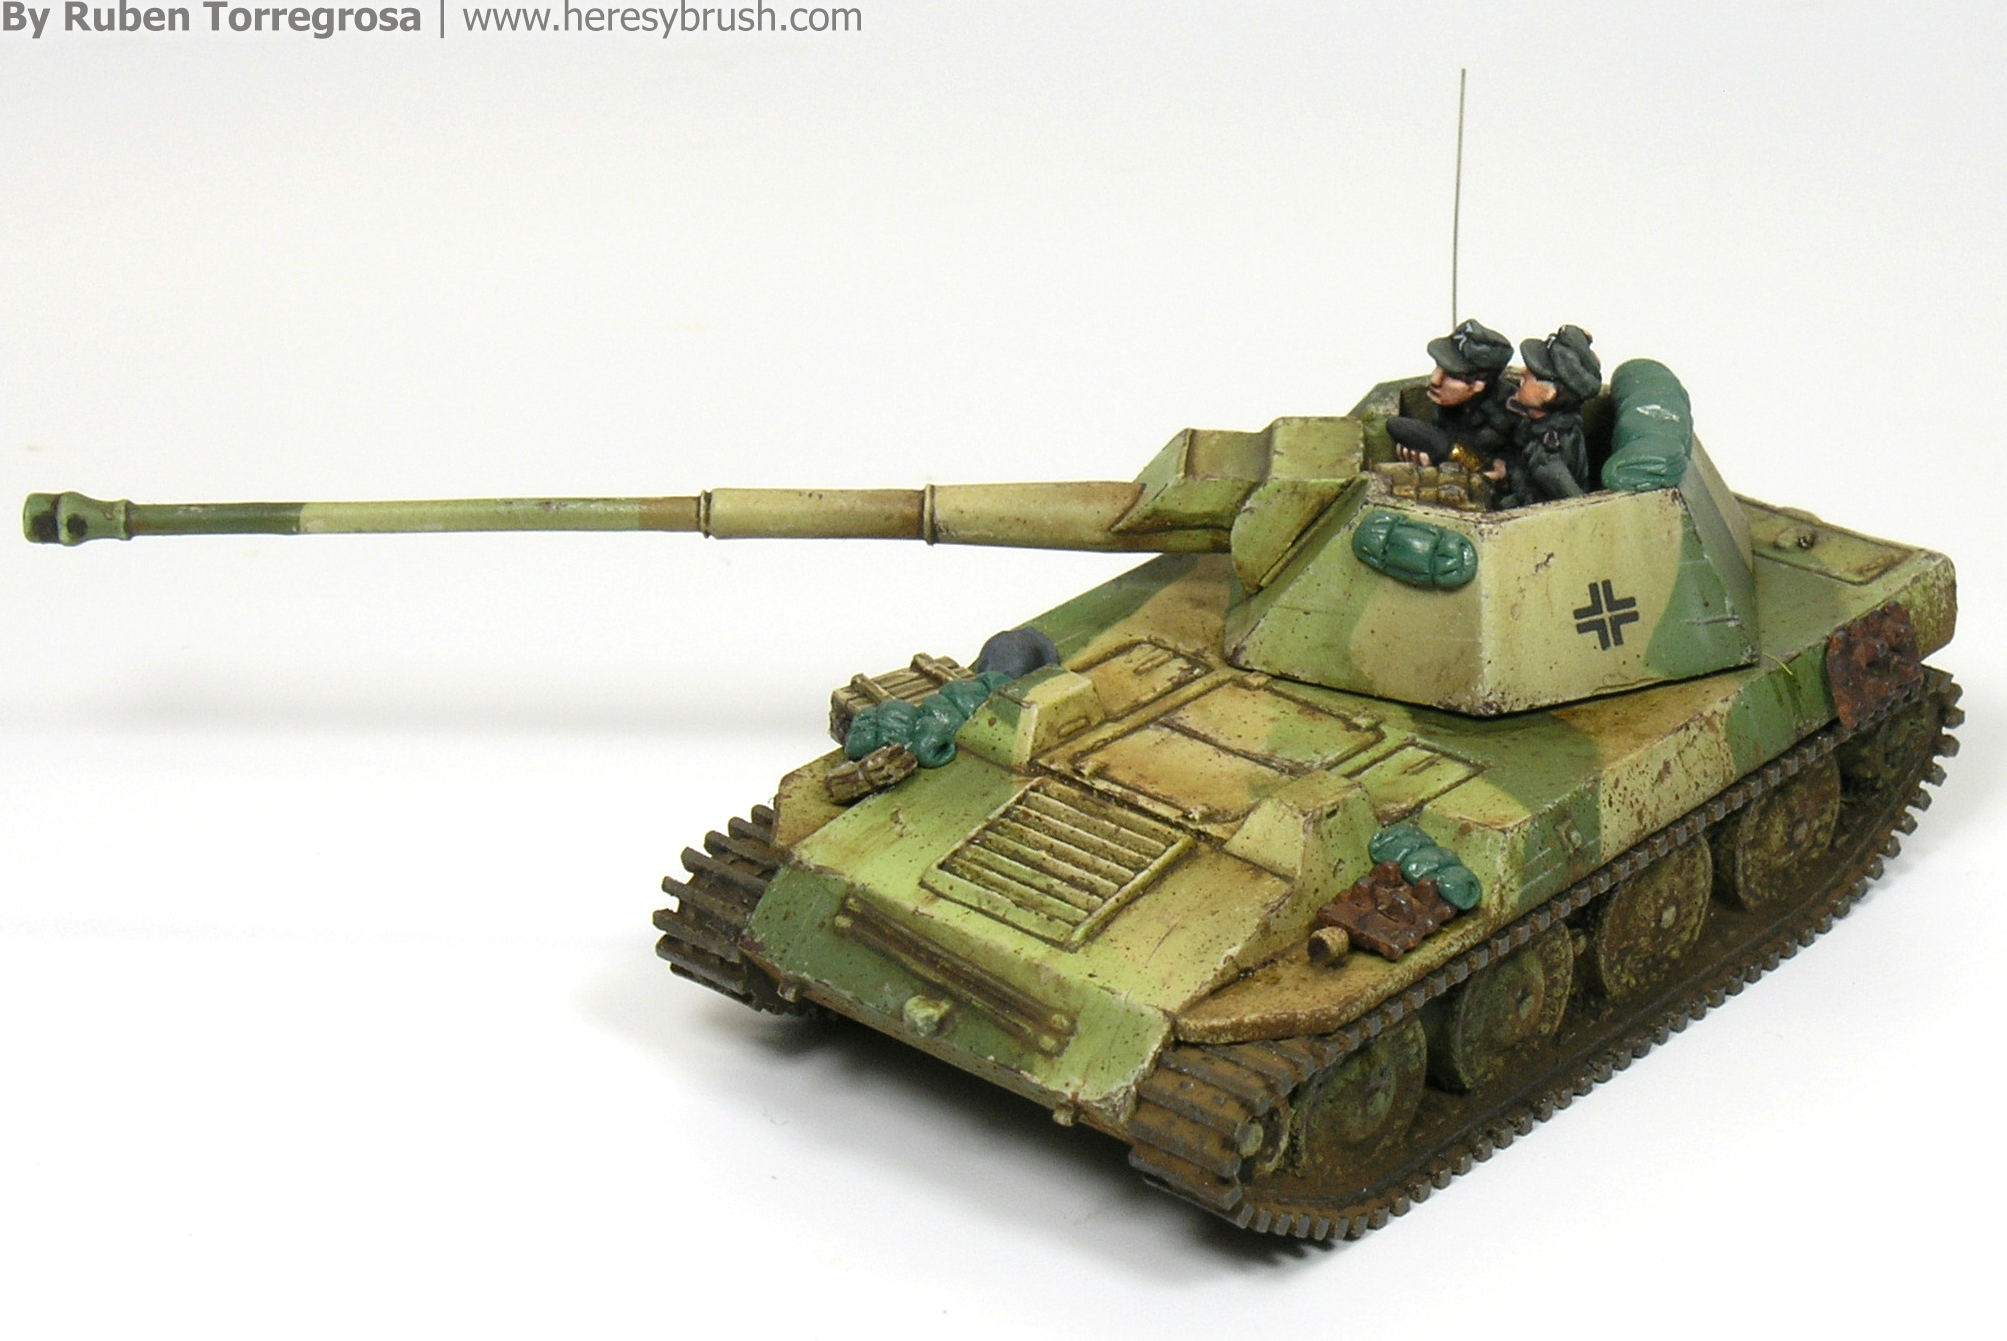 Painting 15mm tanks: Steyr tank